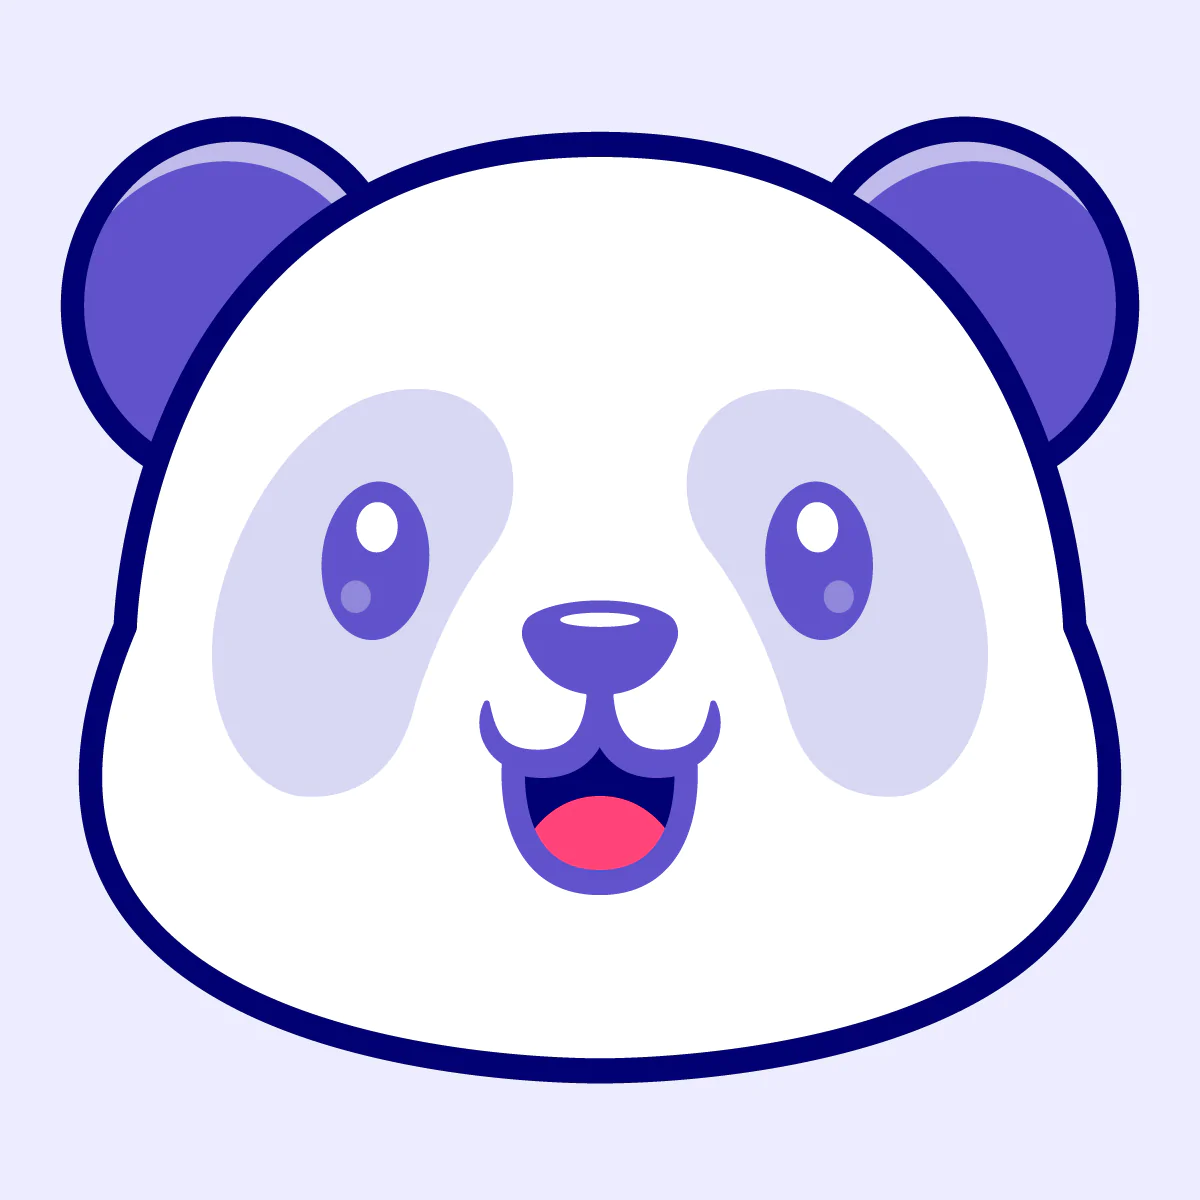 Panda PreOrder‑Split Payments